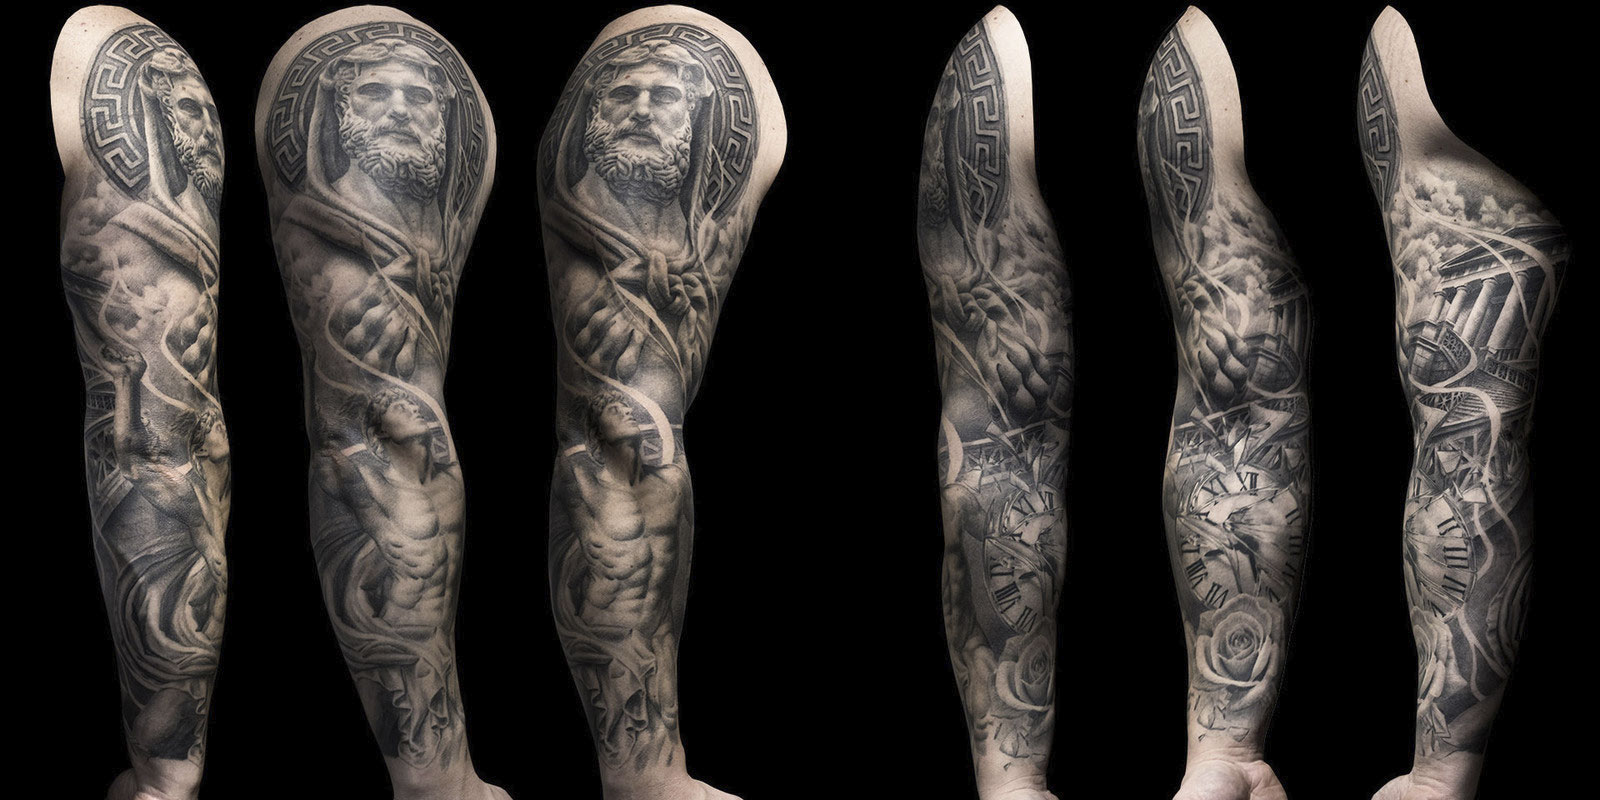 Greek Mythology Sleeve Tattoos - wide 2